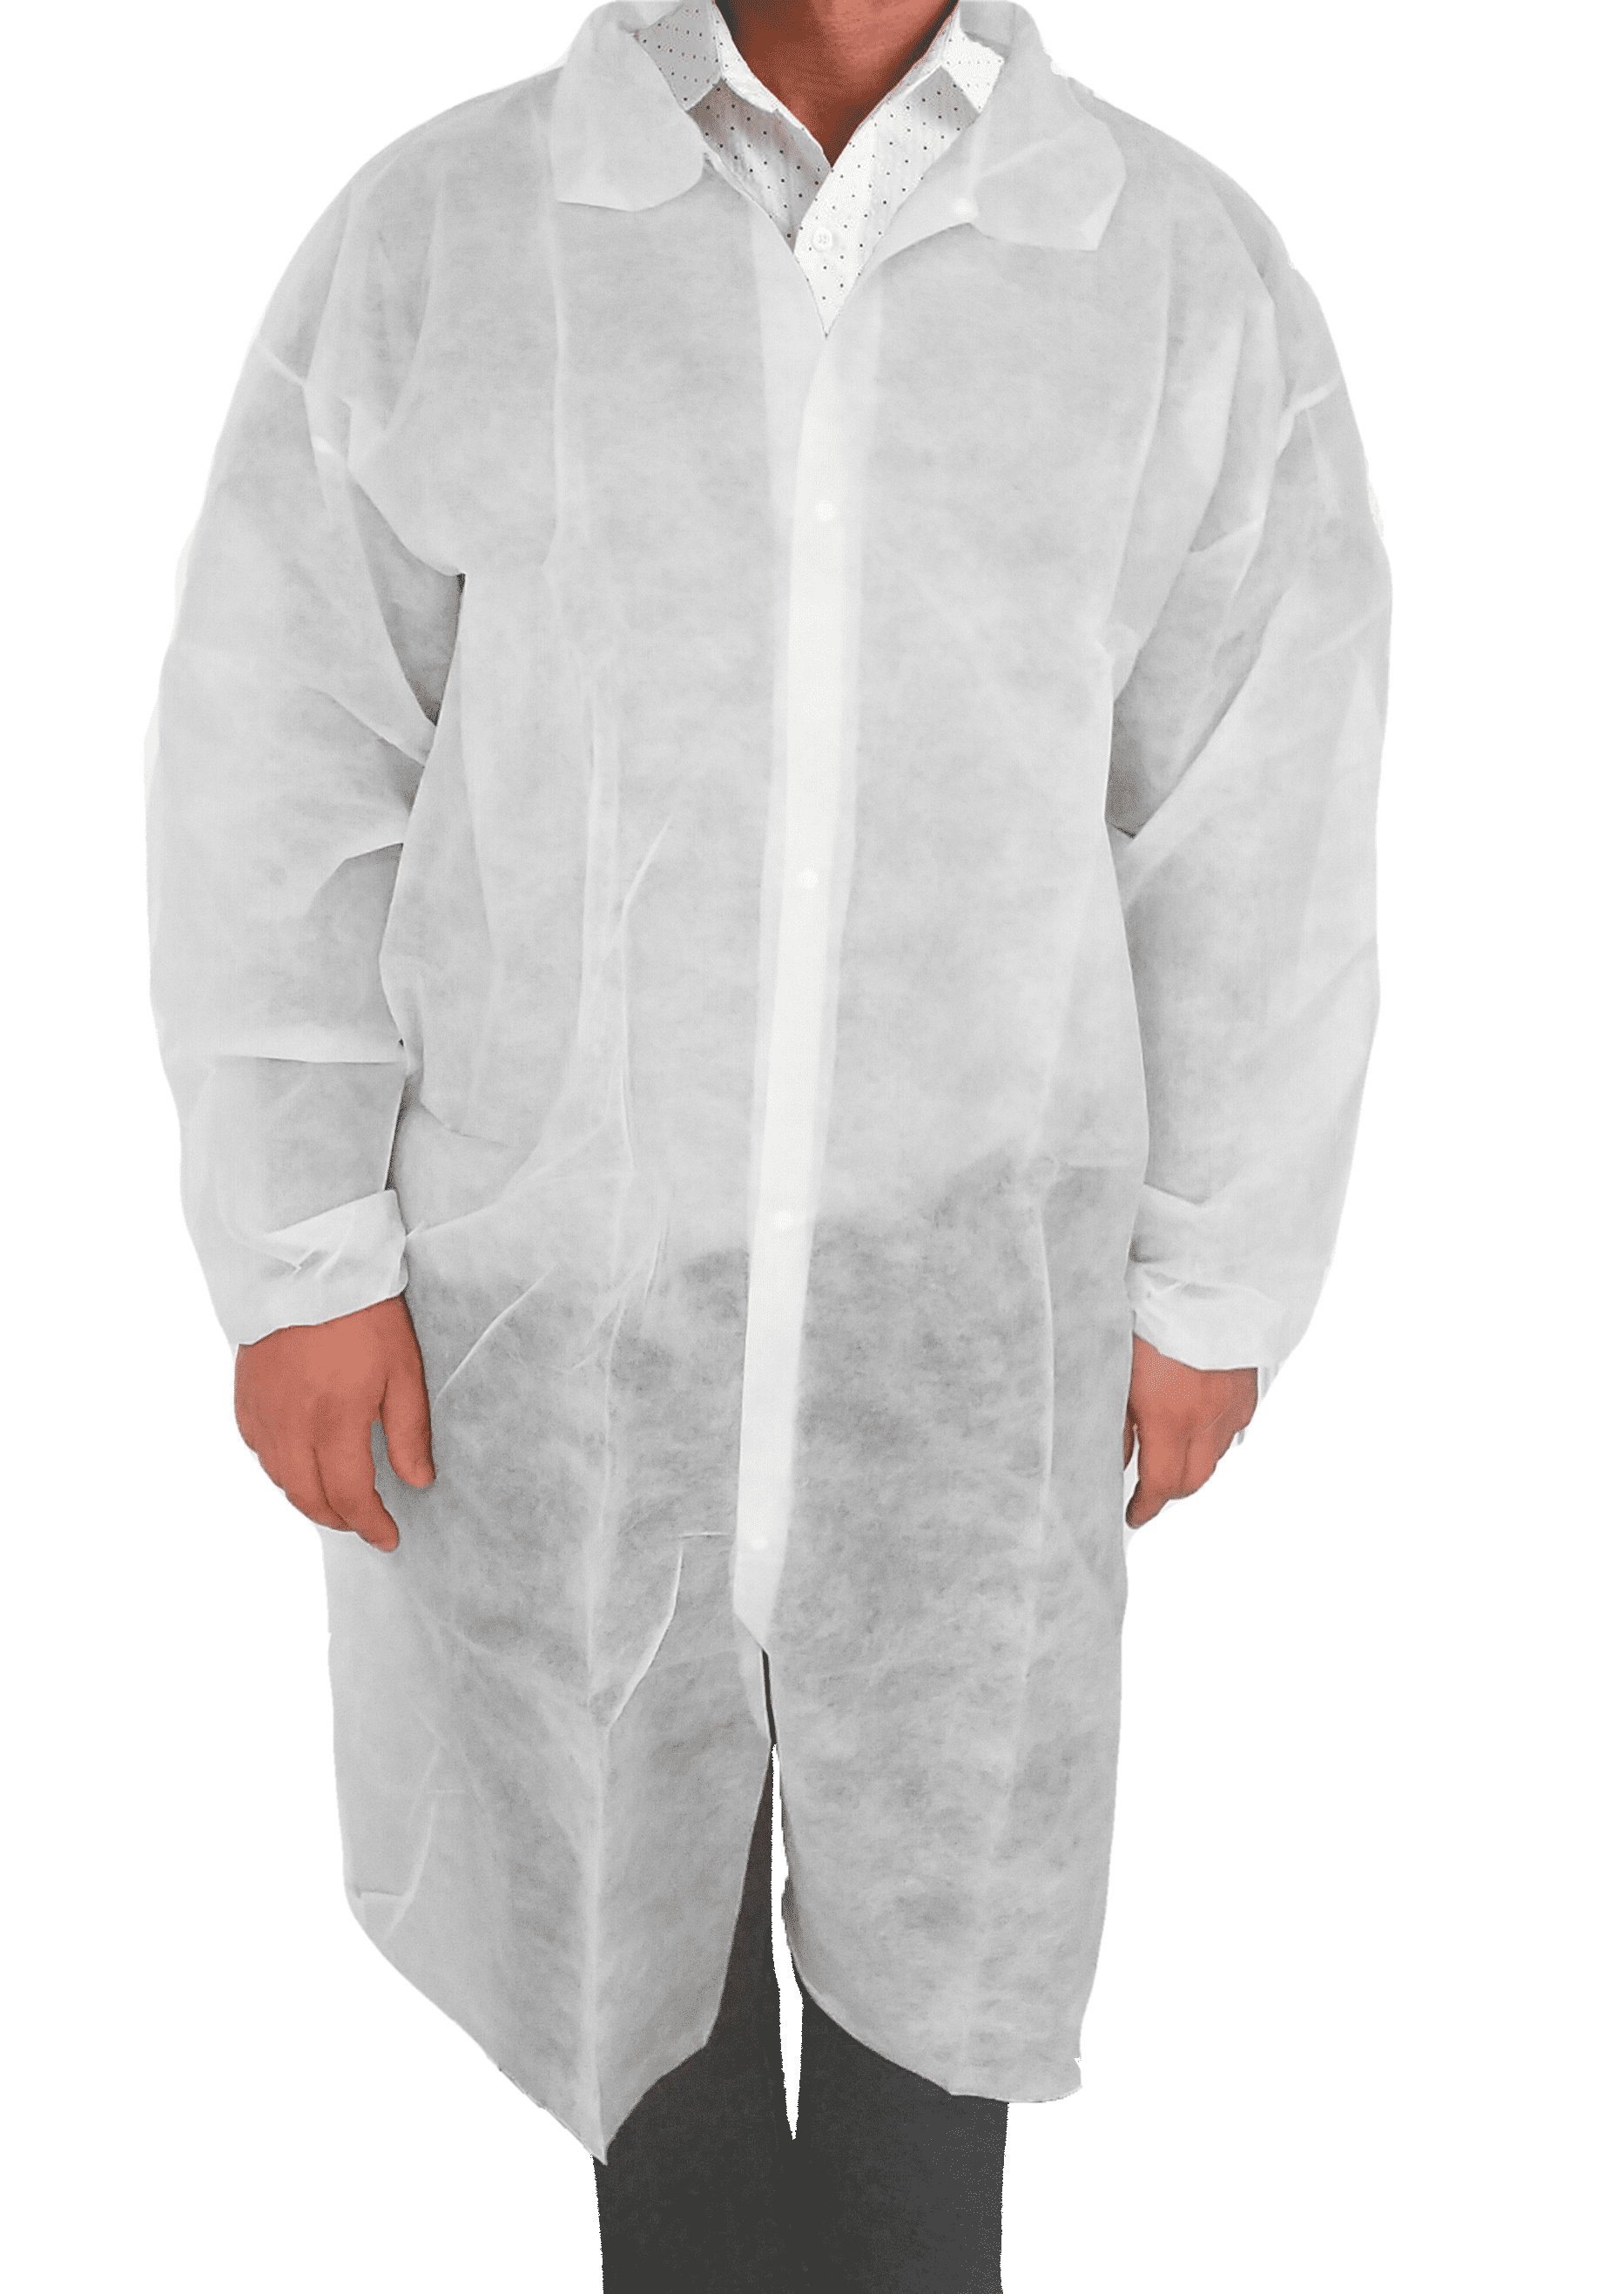 10 pack Size Large Wholesale Disposable Lab Coats White 